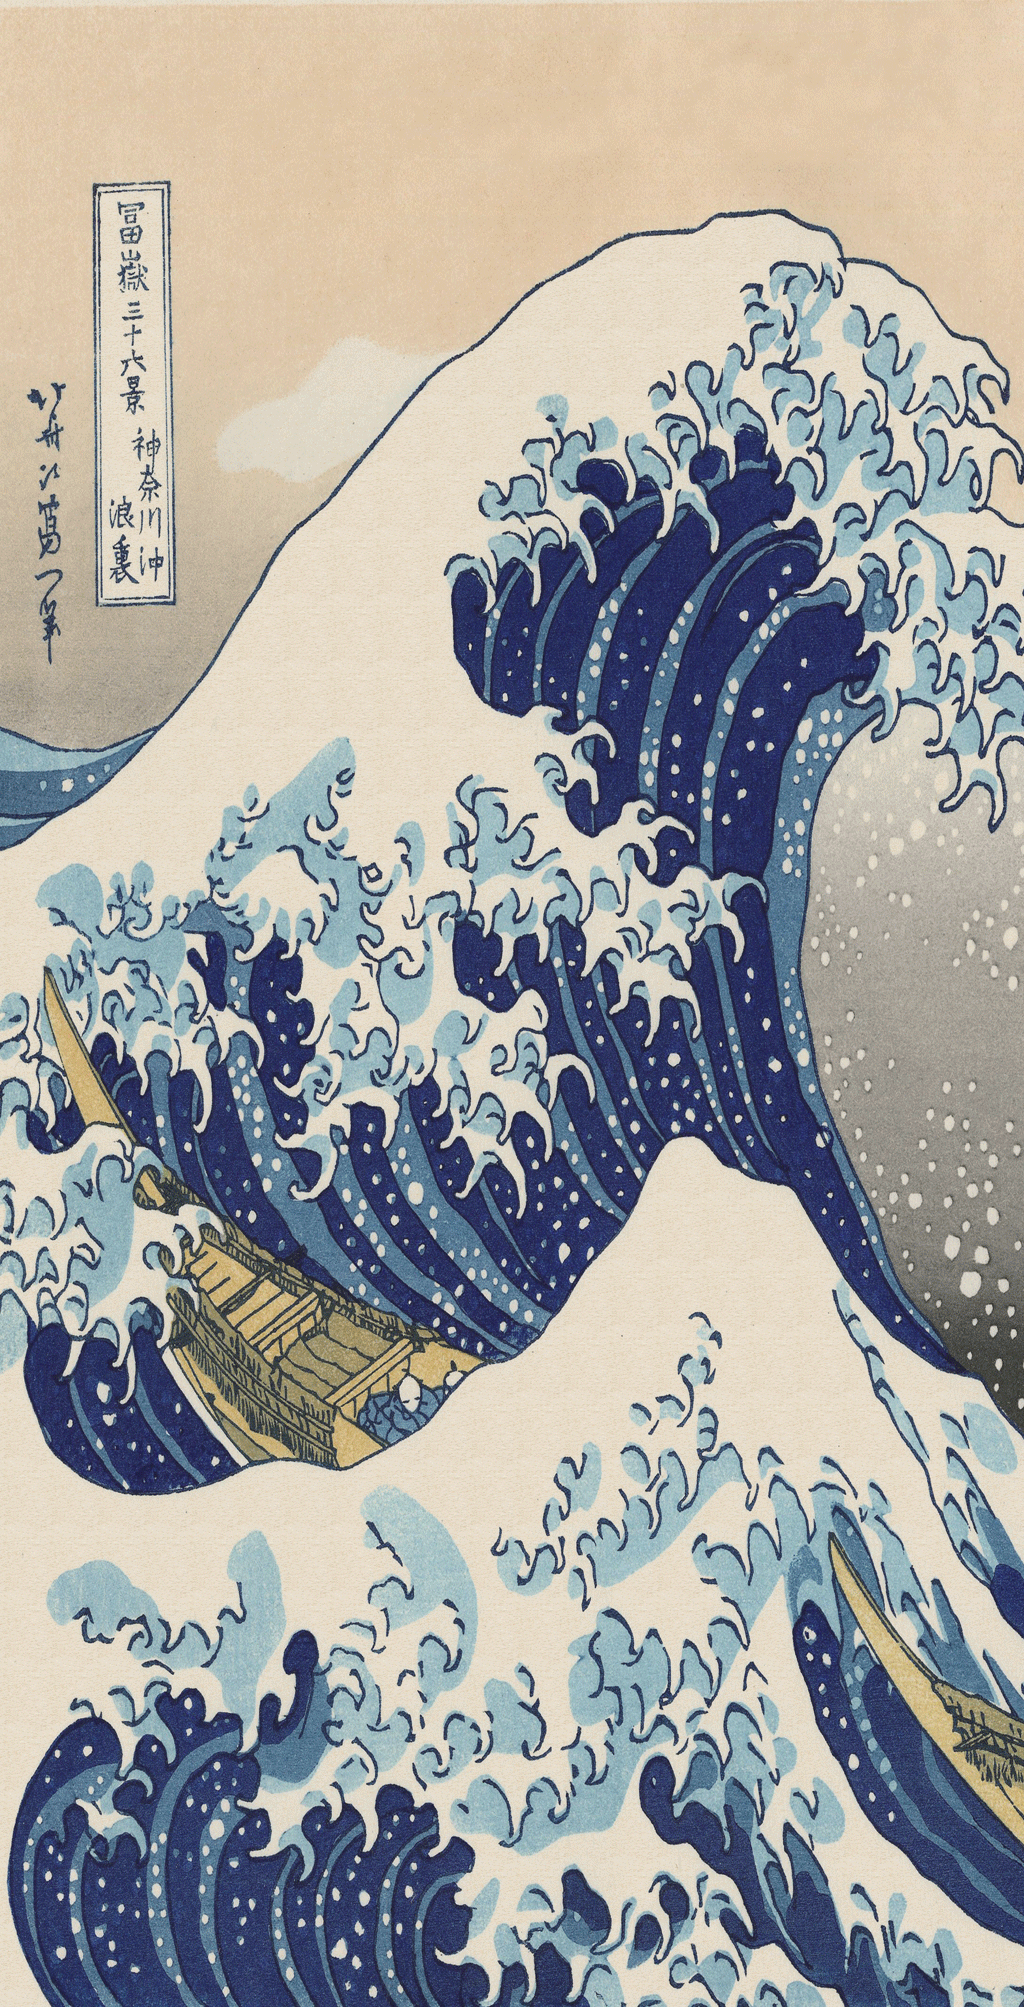 A052193-中式玄关-国画山水-日式山水海浪